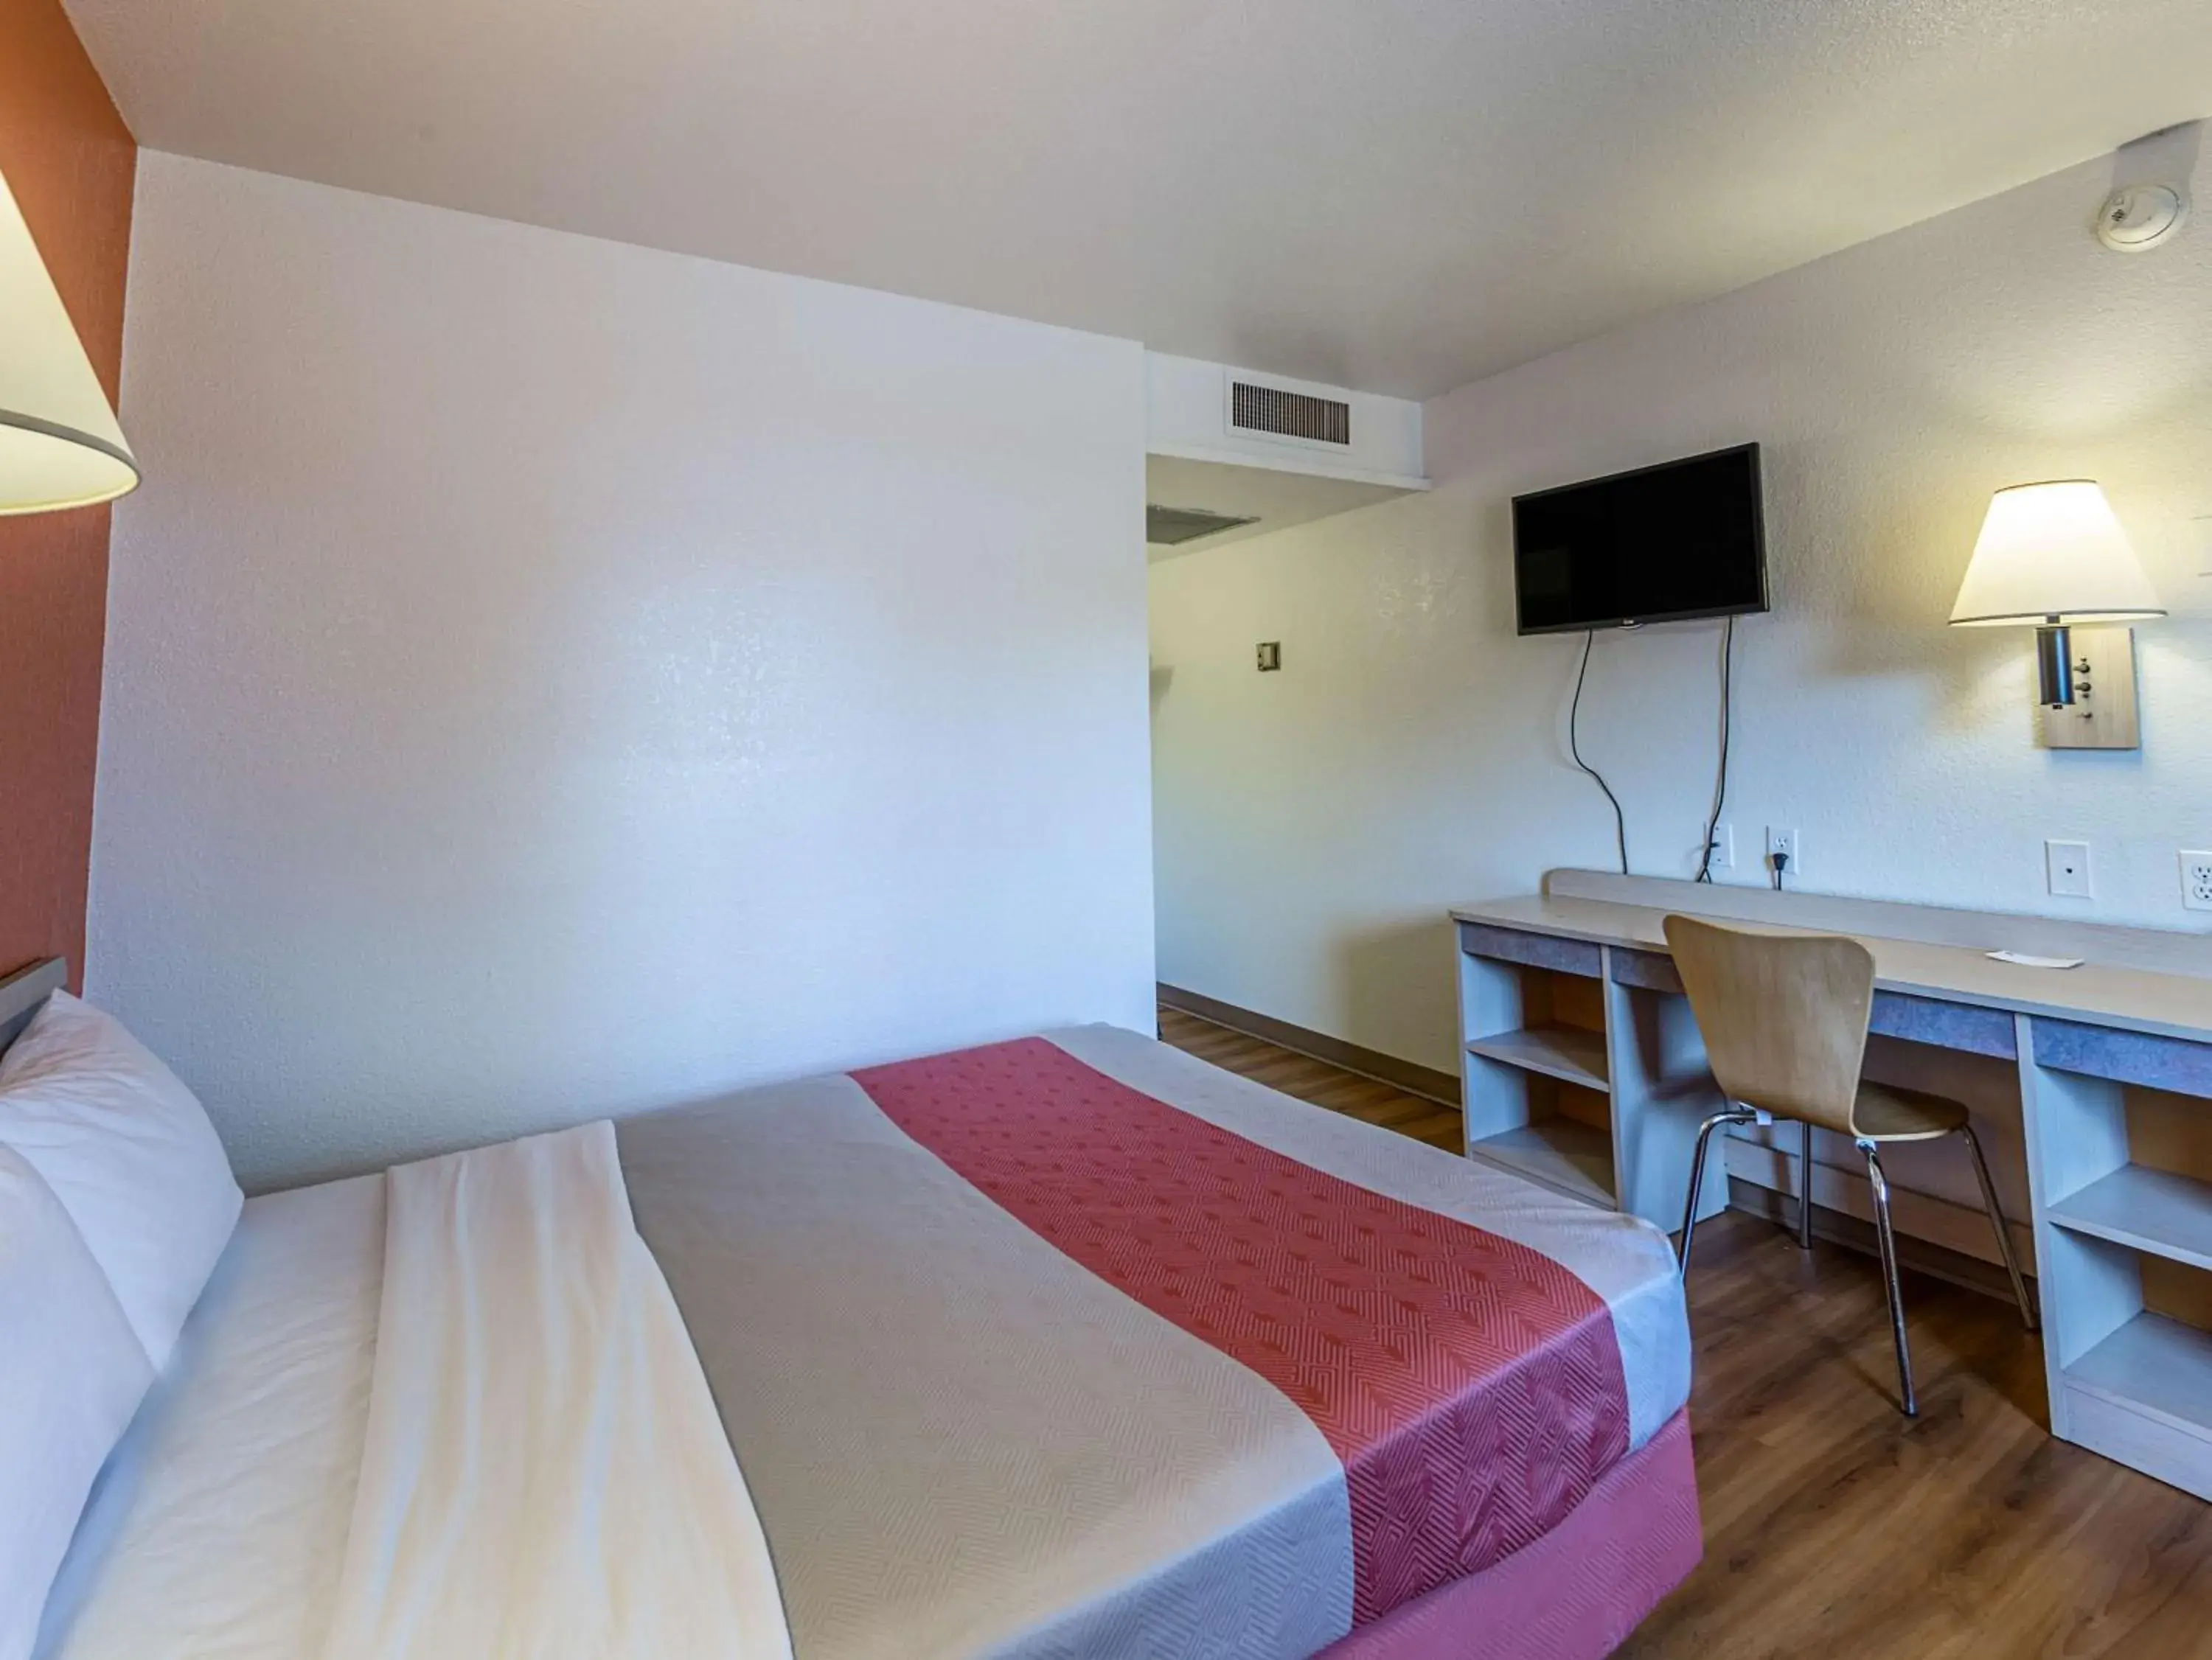 TV and multimedia, Room Photo in Motel 6-Yreka, CA